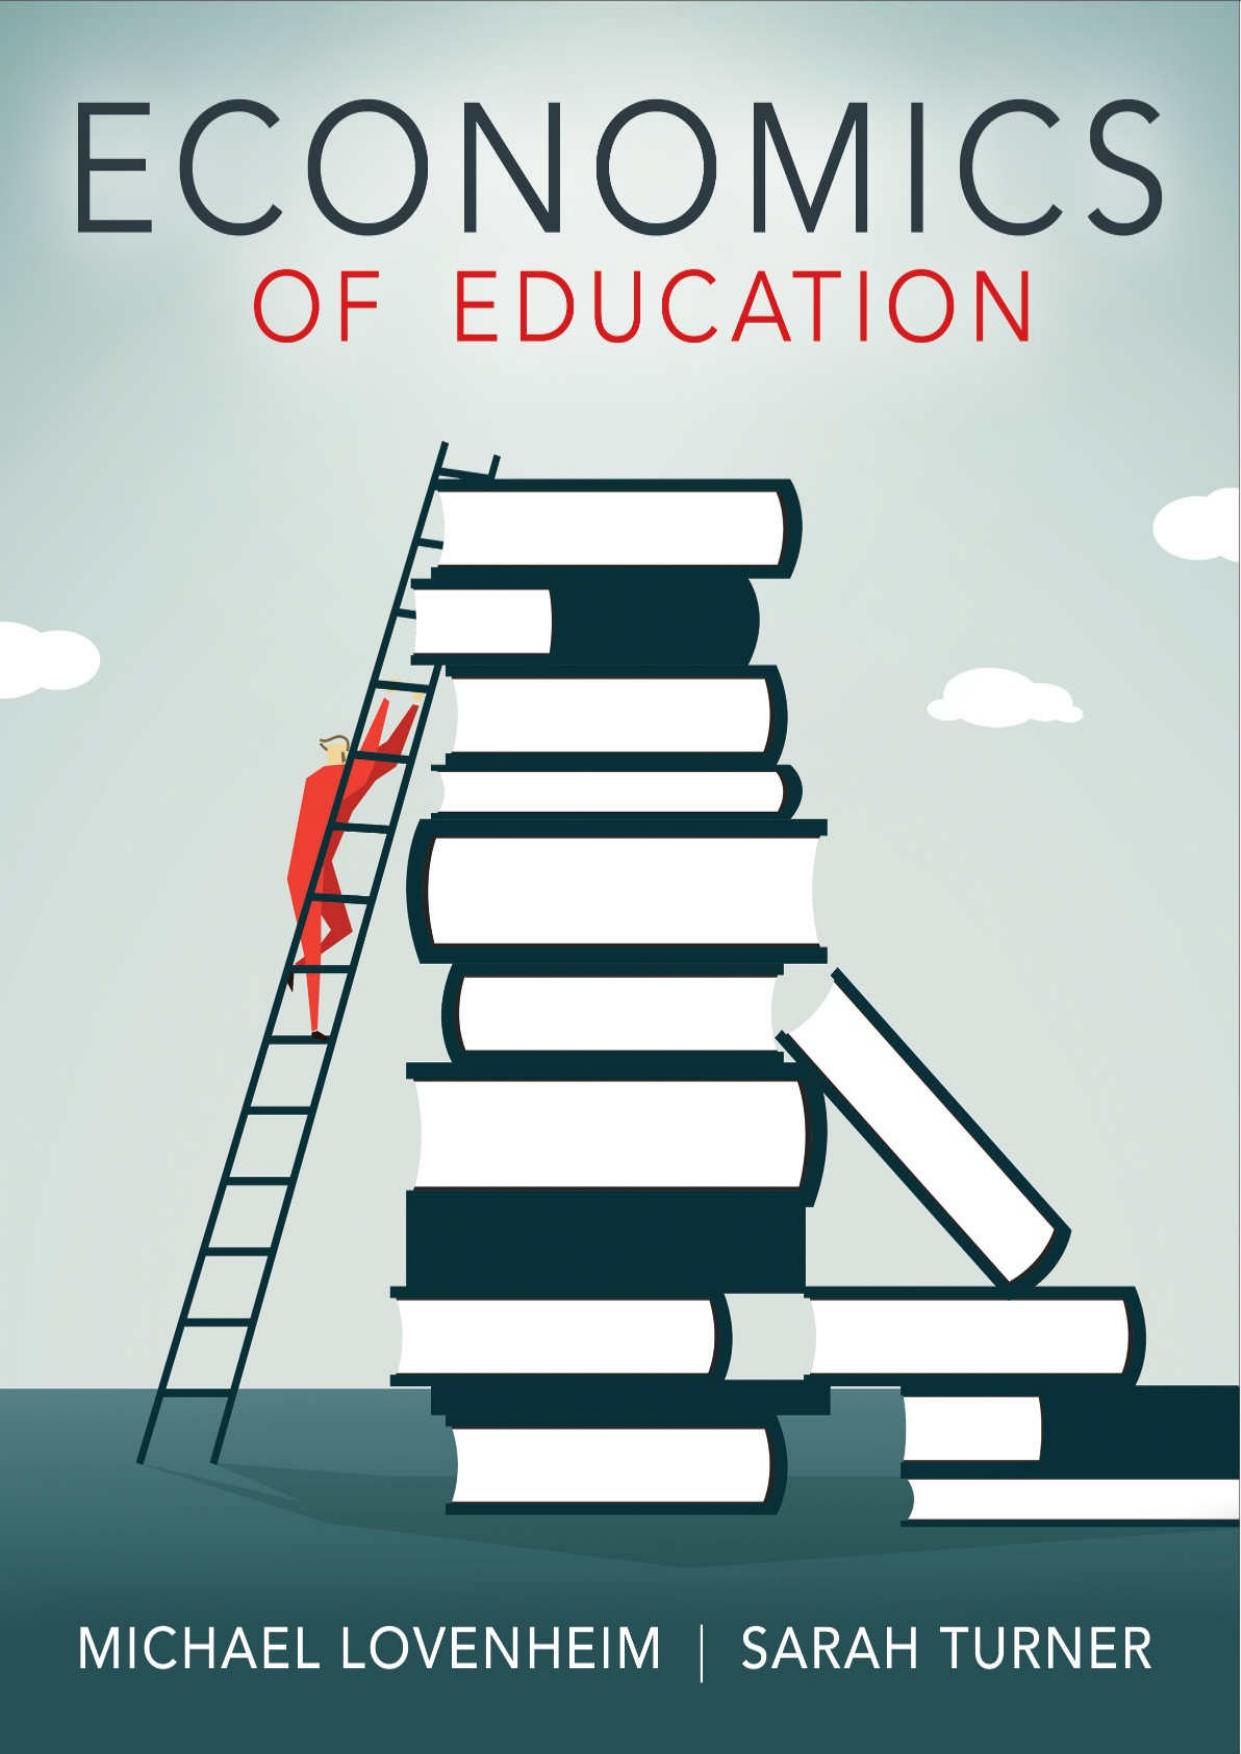 Economics of Education - Michael Lovenheim & Sarah E. Turner.jpg